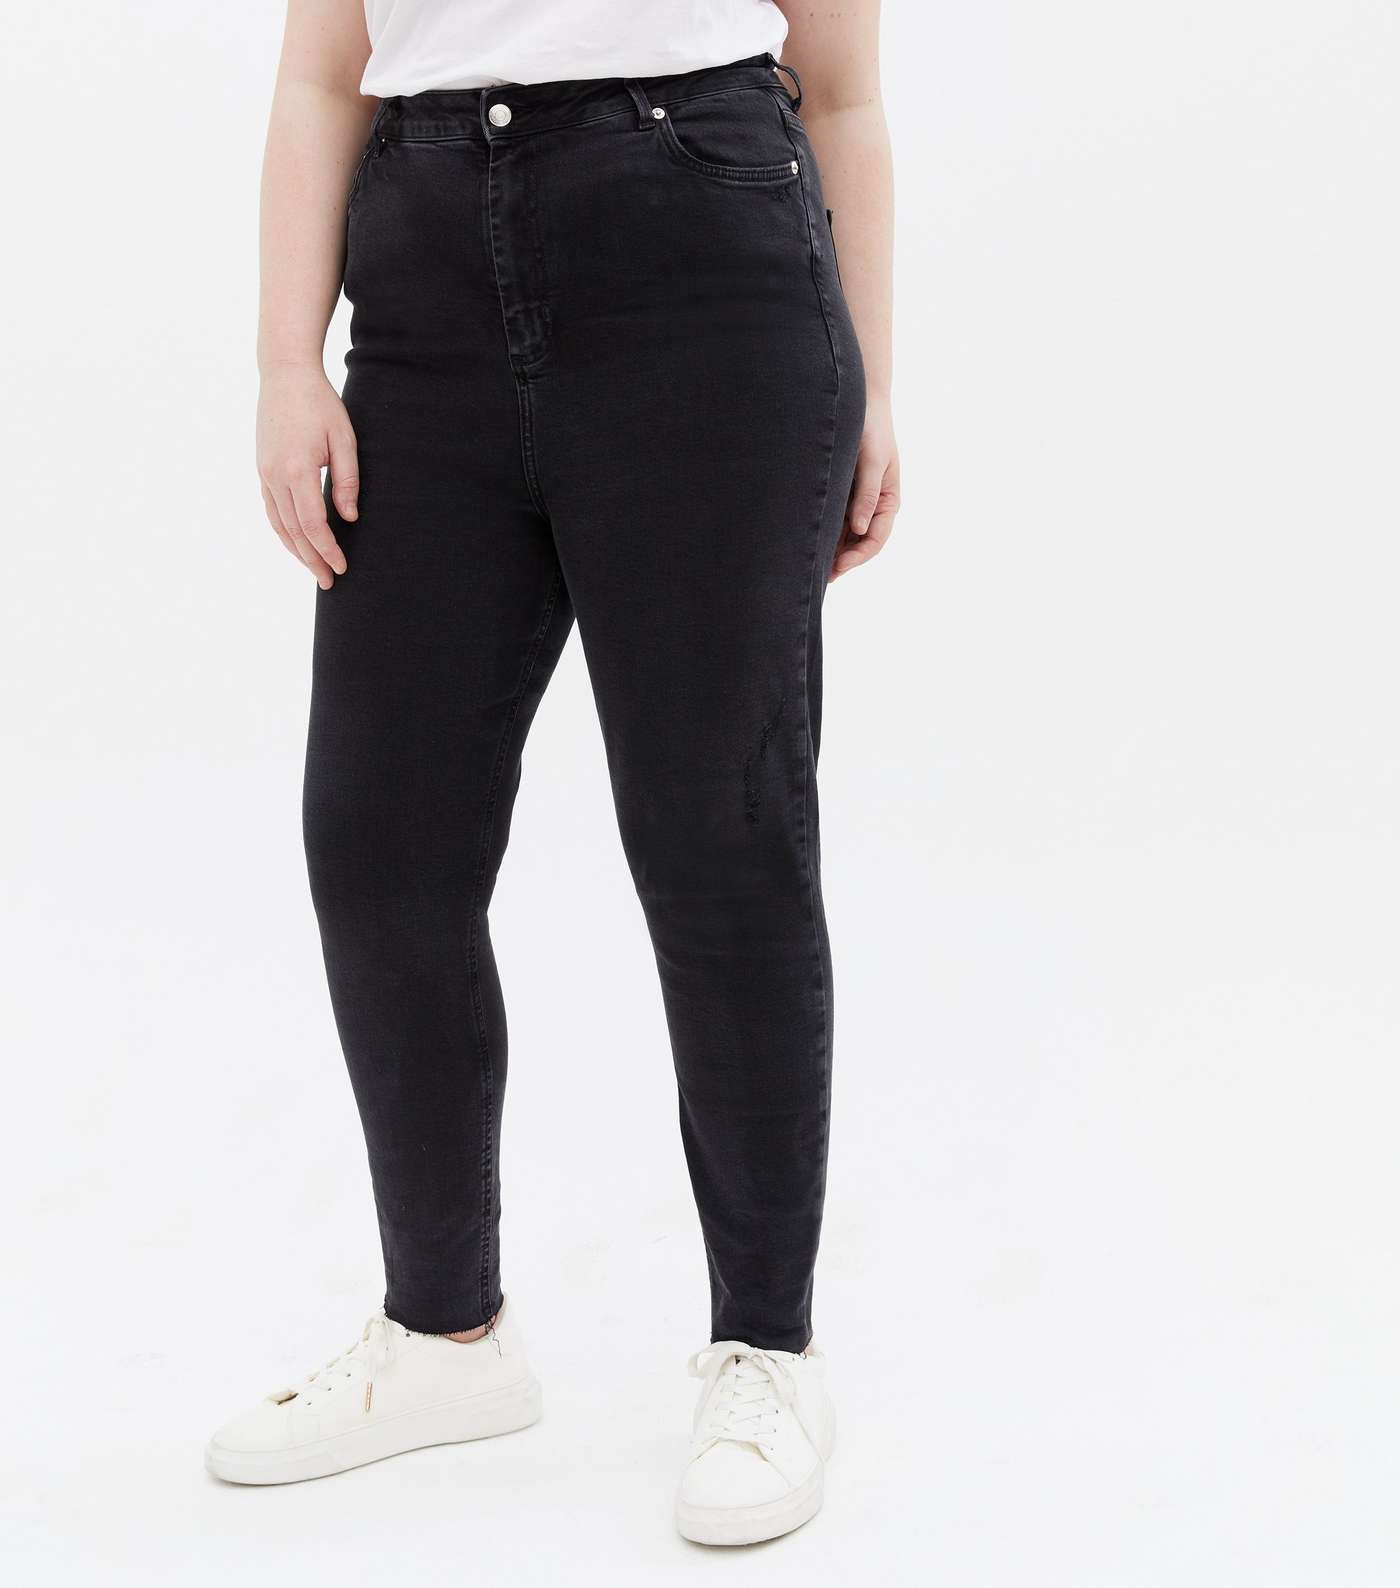 Curves Black High Waist Ashleigh Skinny Jeans Image 2